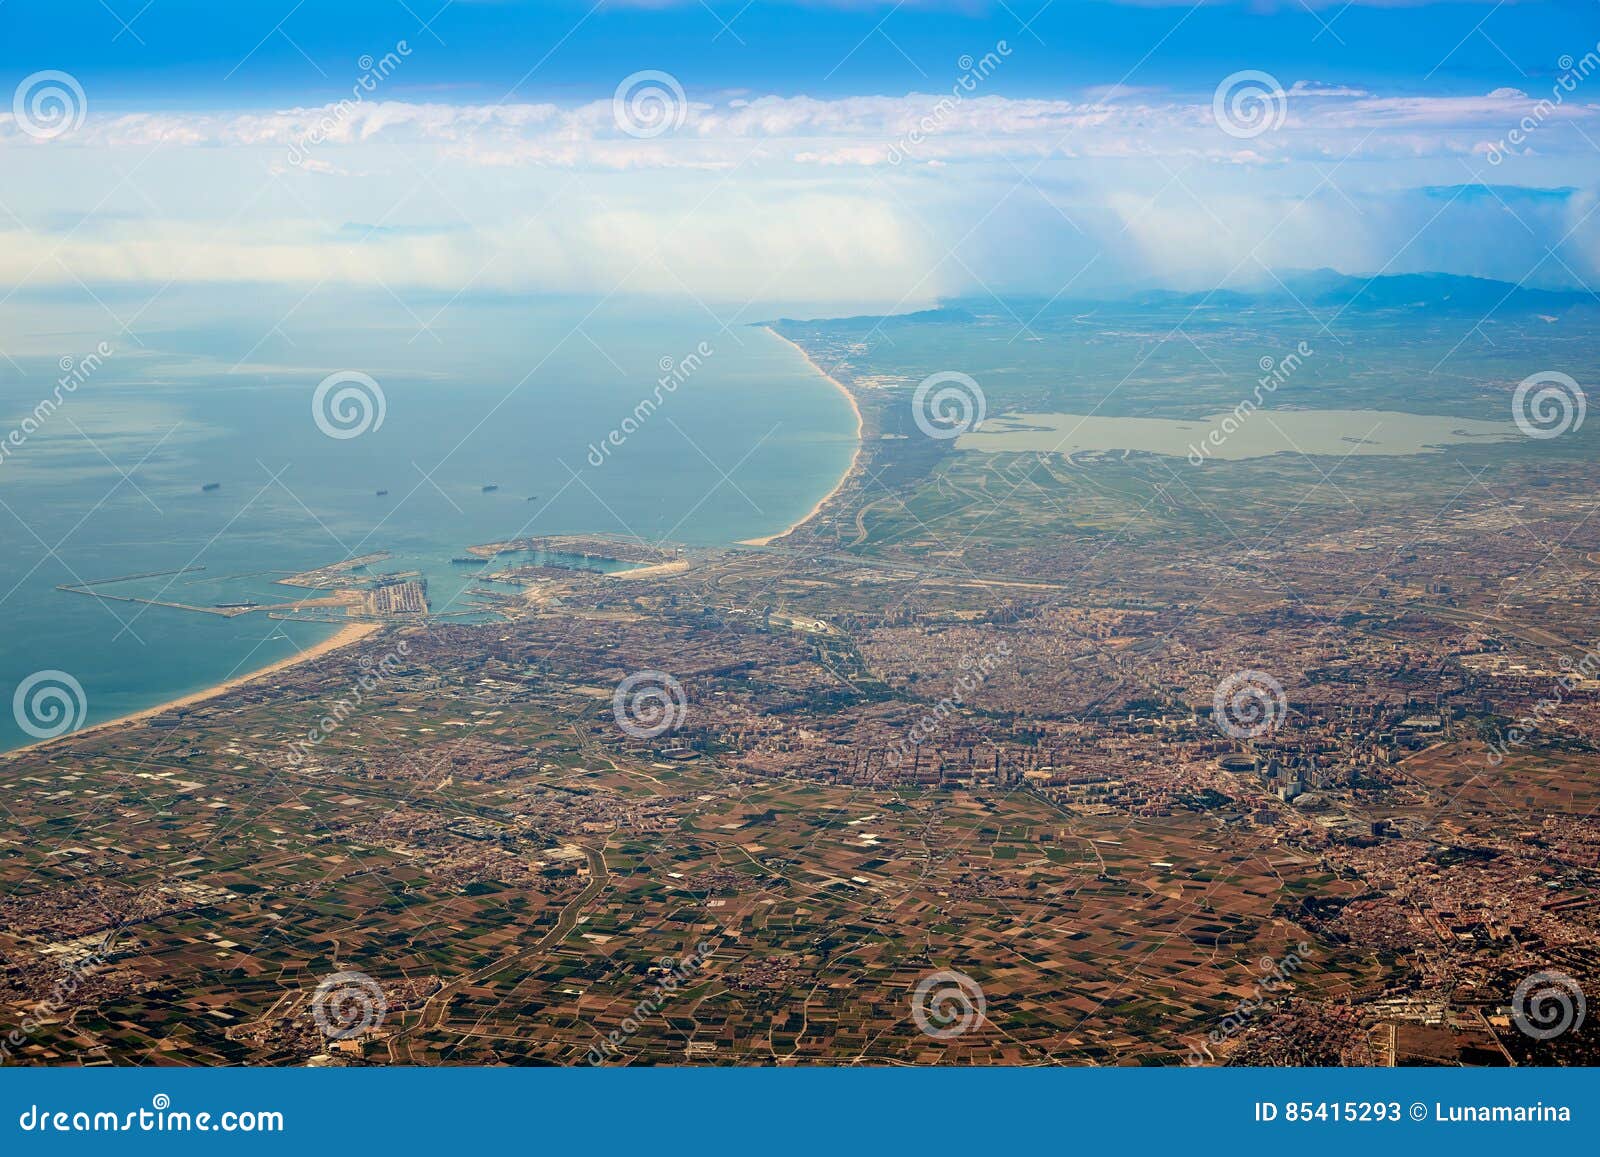 valencia city and albufera lake aerial spain